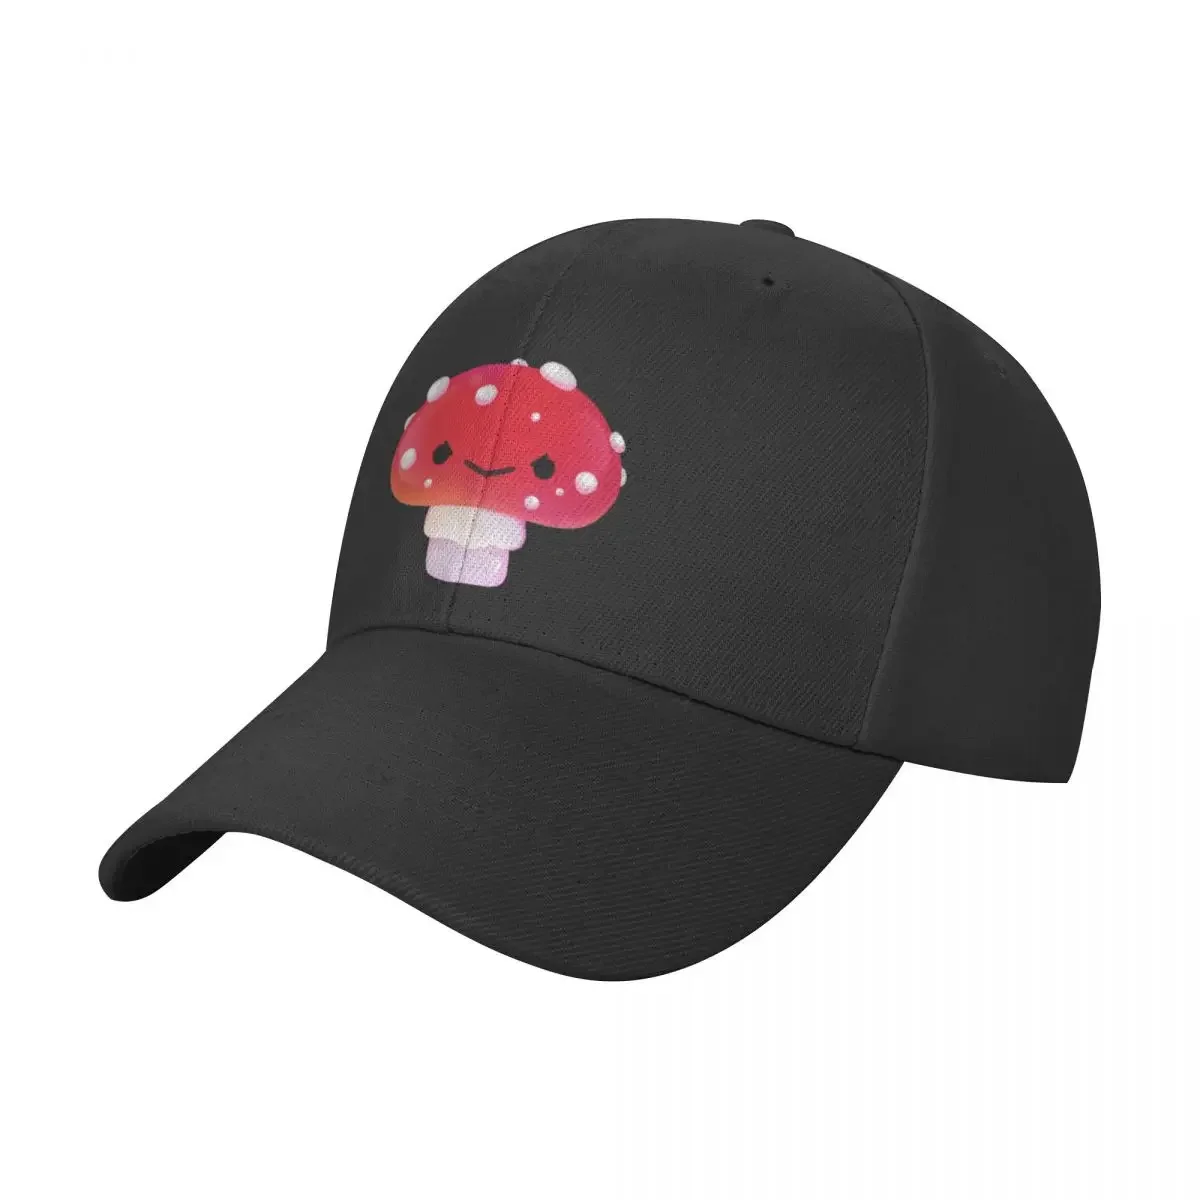 

Mushroom Baseball Cap Wild Ball Hat Golf Hat Man black For Man Women's